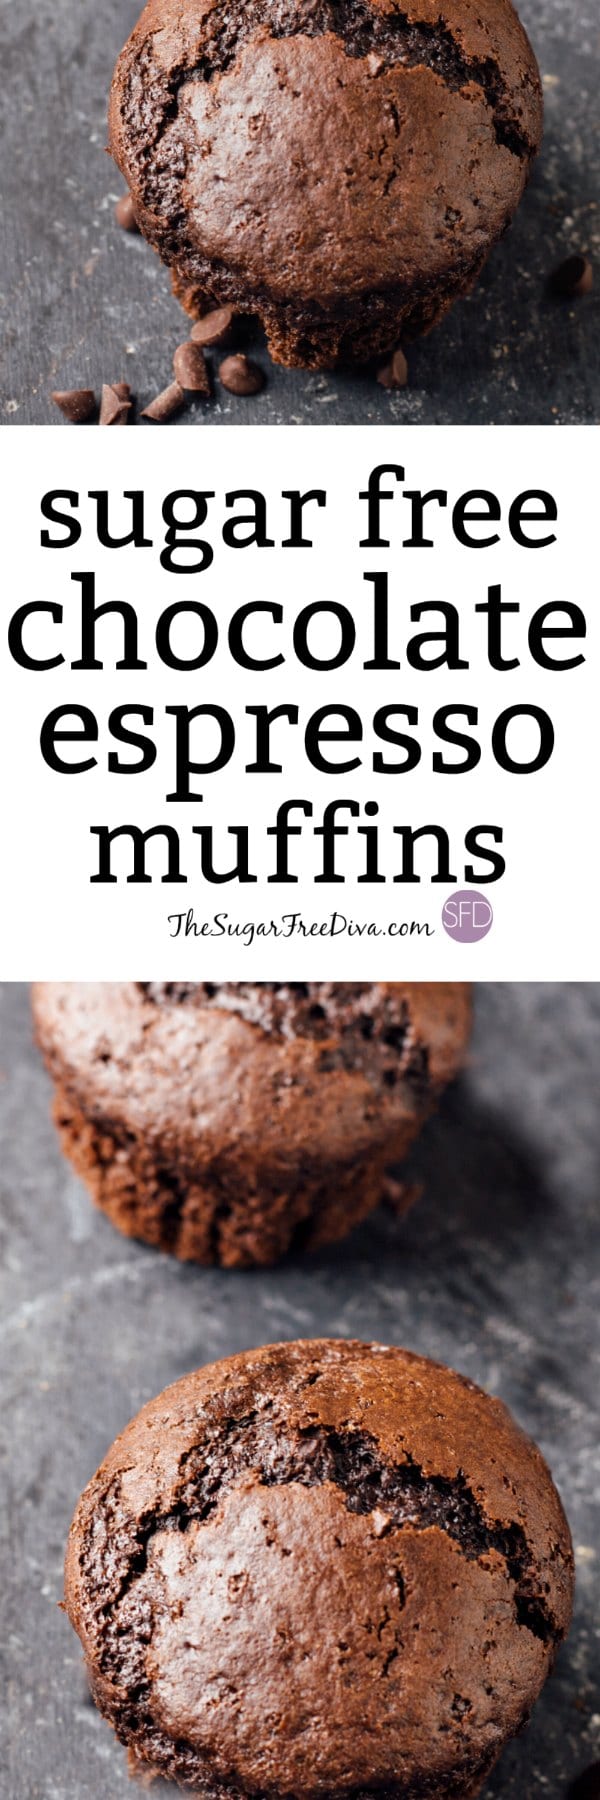 Sugar Free Chocolate Espresso Muffins